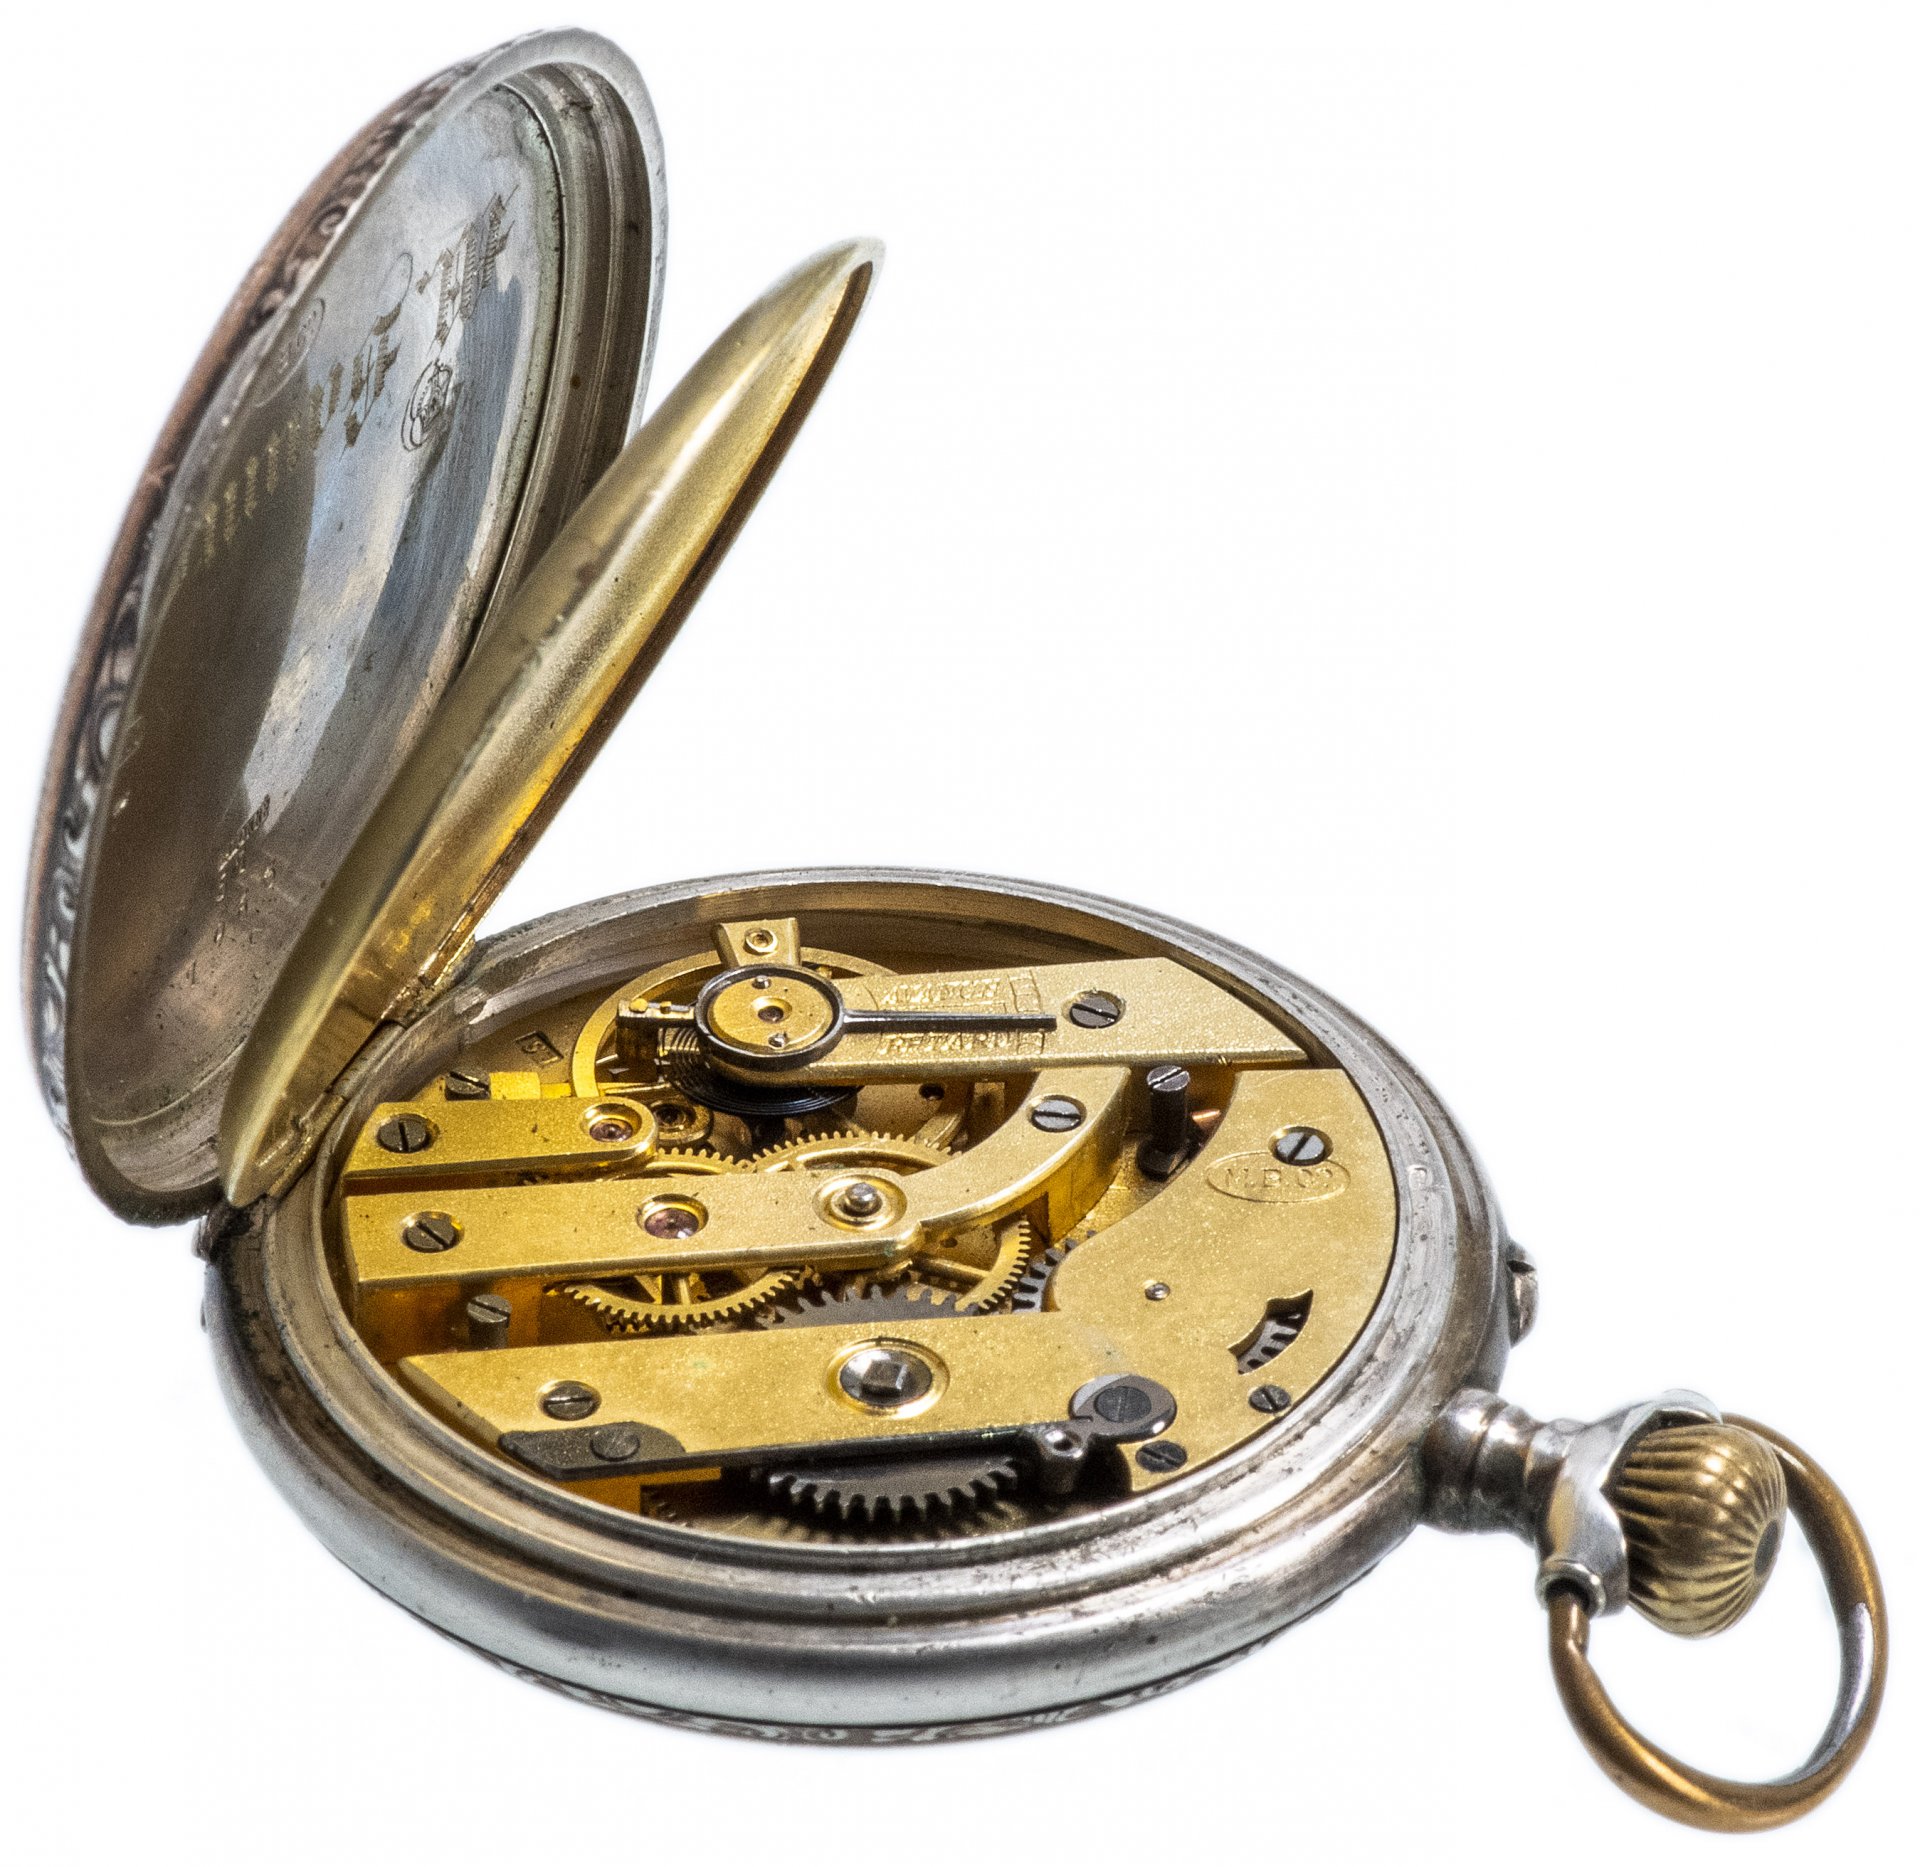 Карманные часы серебро. Карманные часы Galonne Швейцария. Часы Galonne карманные серебряные. Швейцарские карманные часы серебро Gallonne. Швейцарские карманные часы серебро ez84.